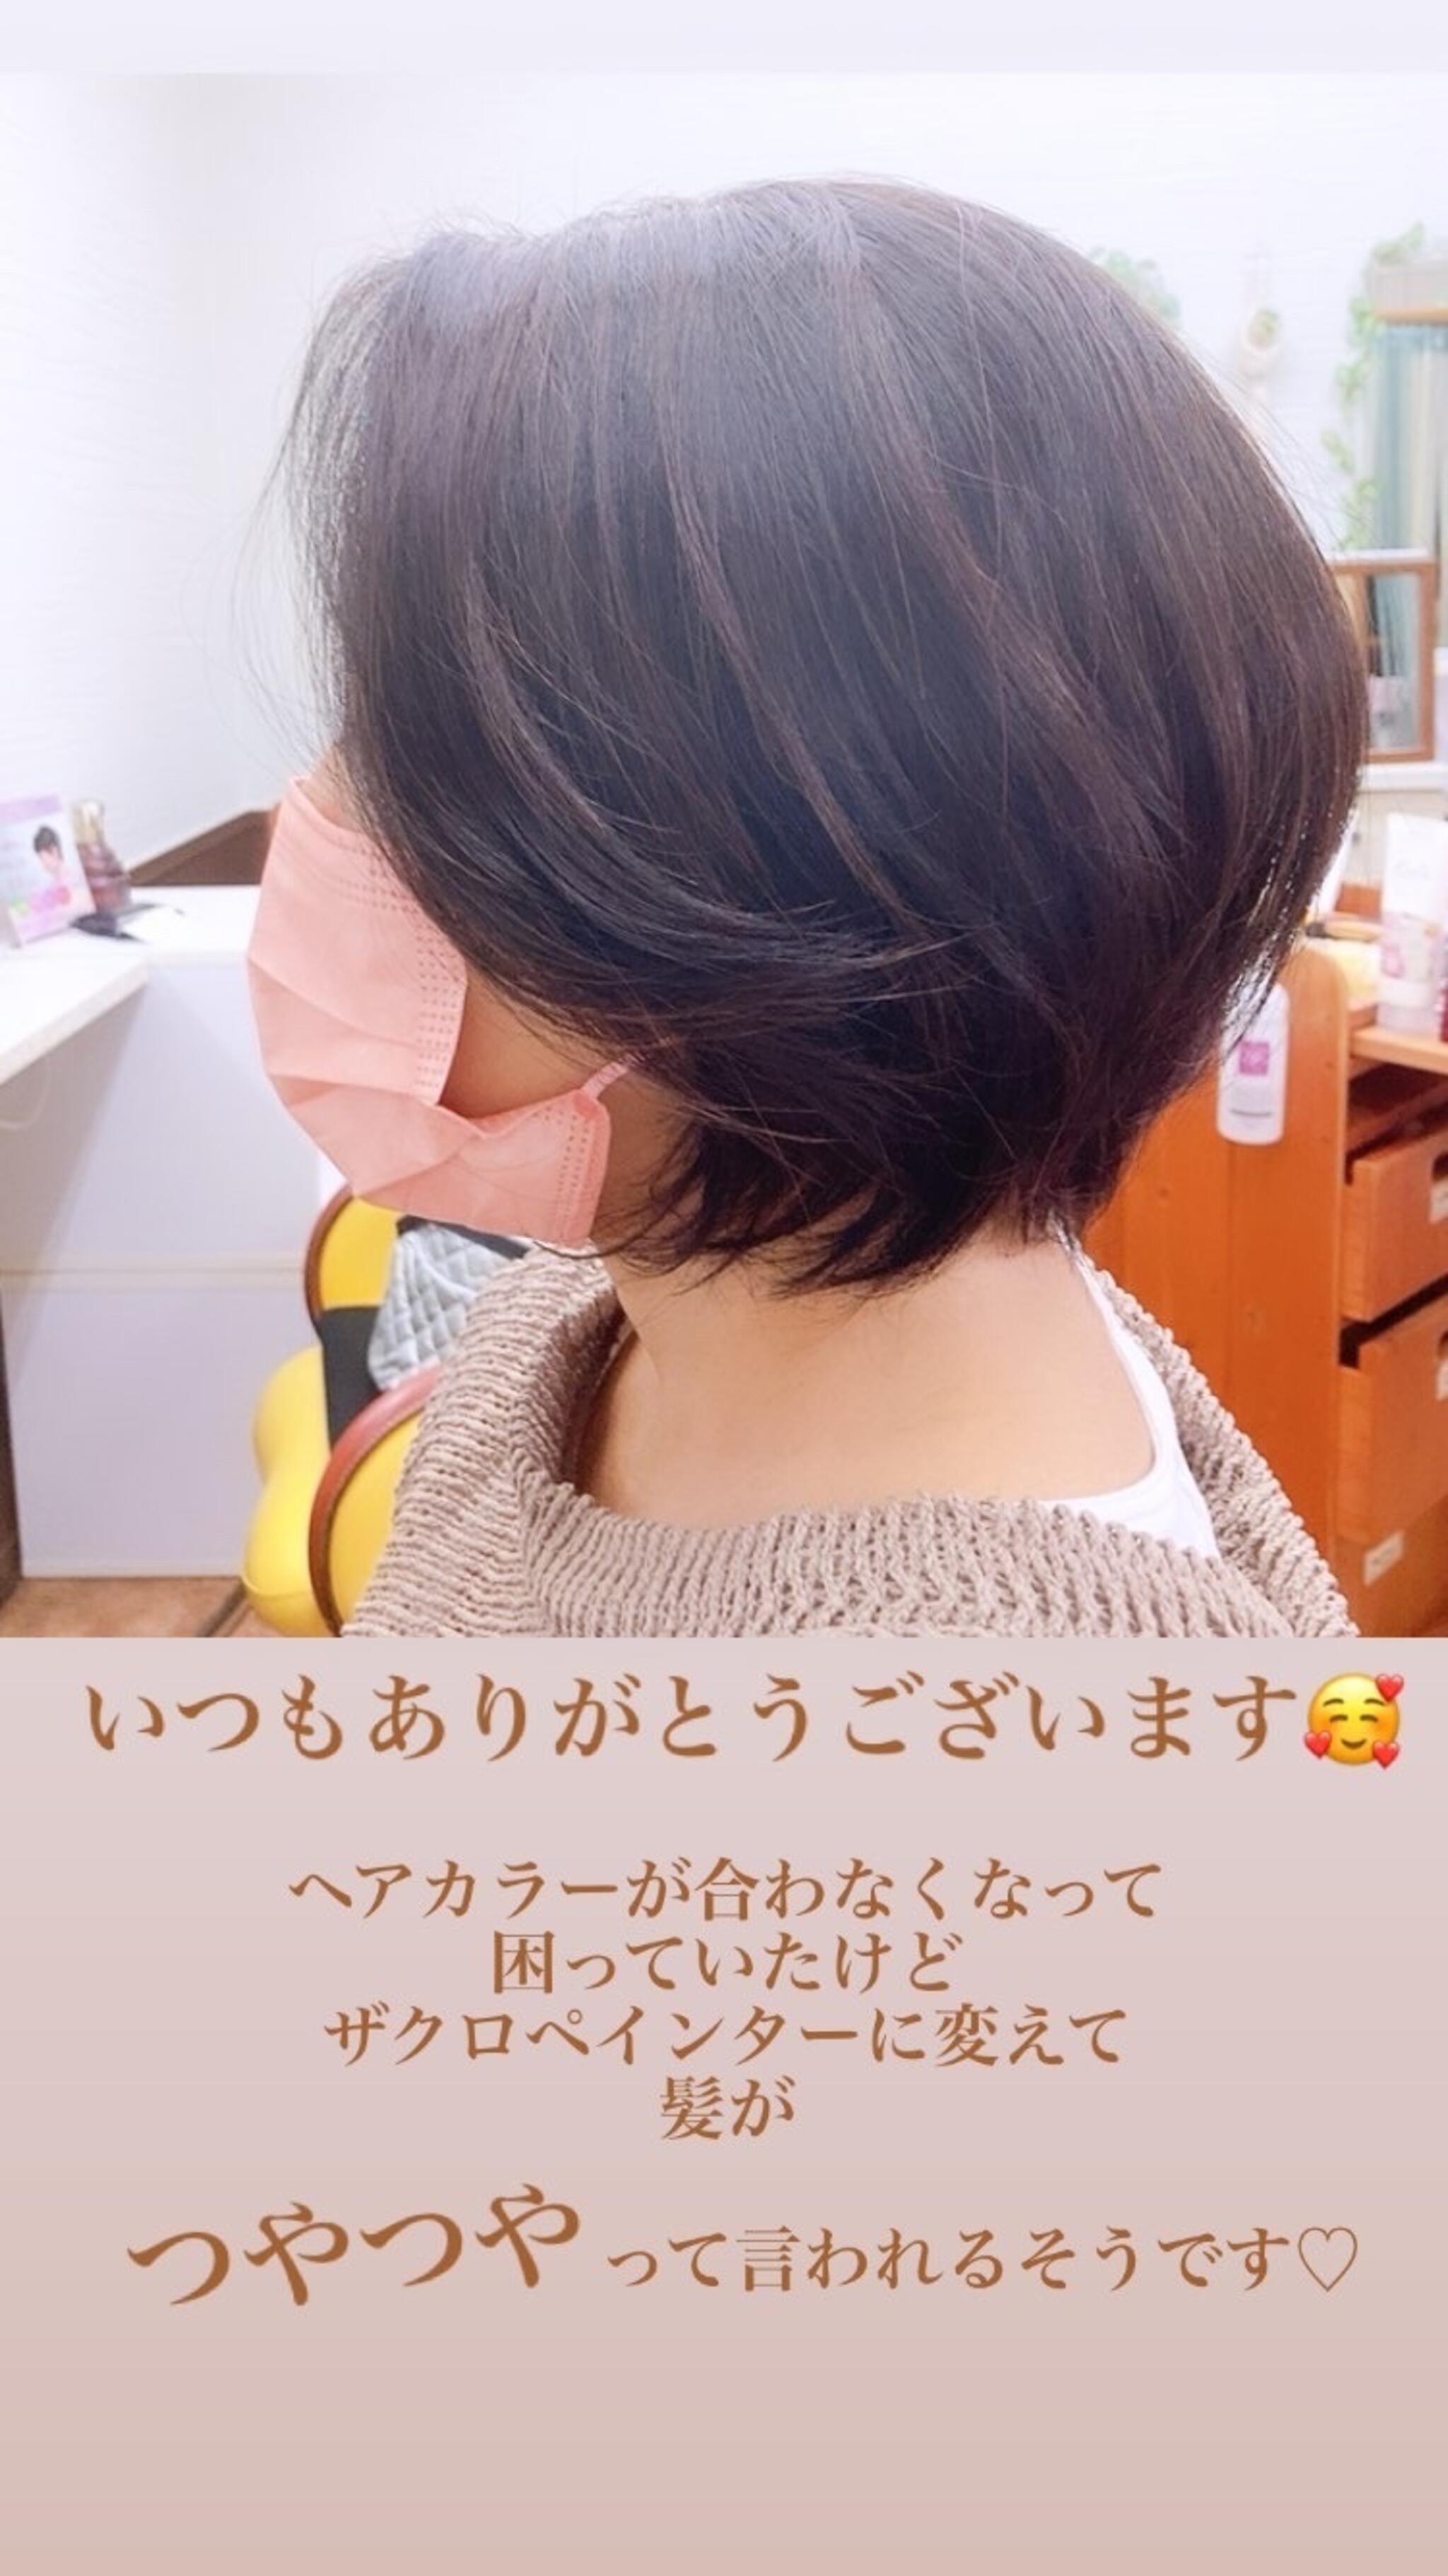 Michiko hair and spaの代表写真6